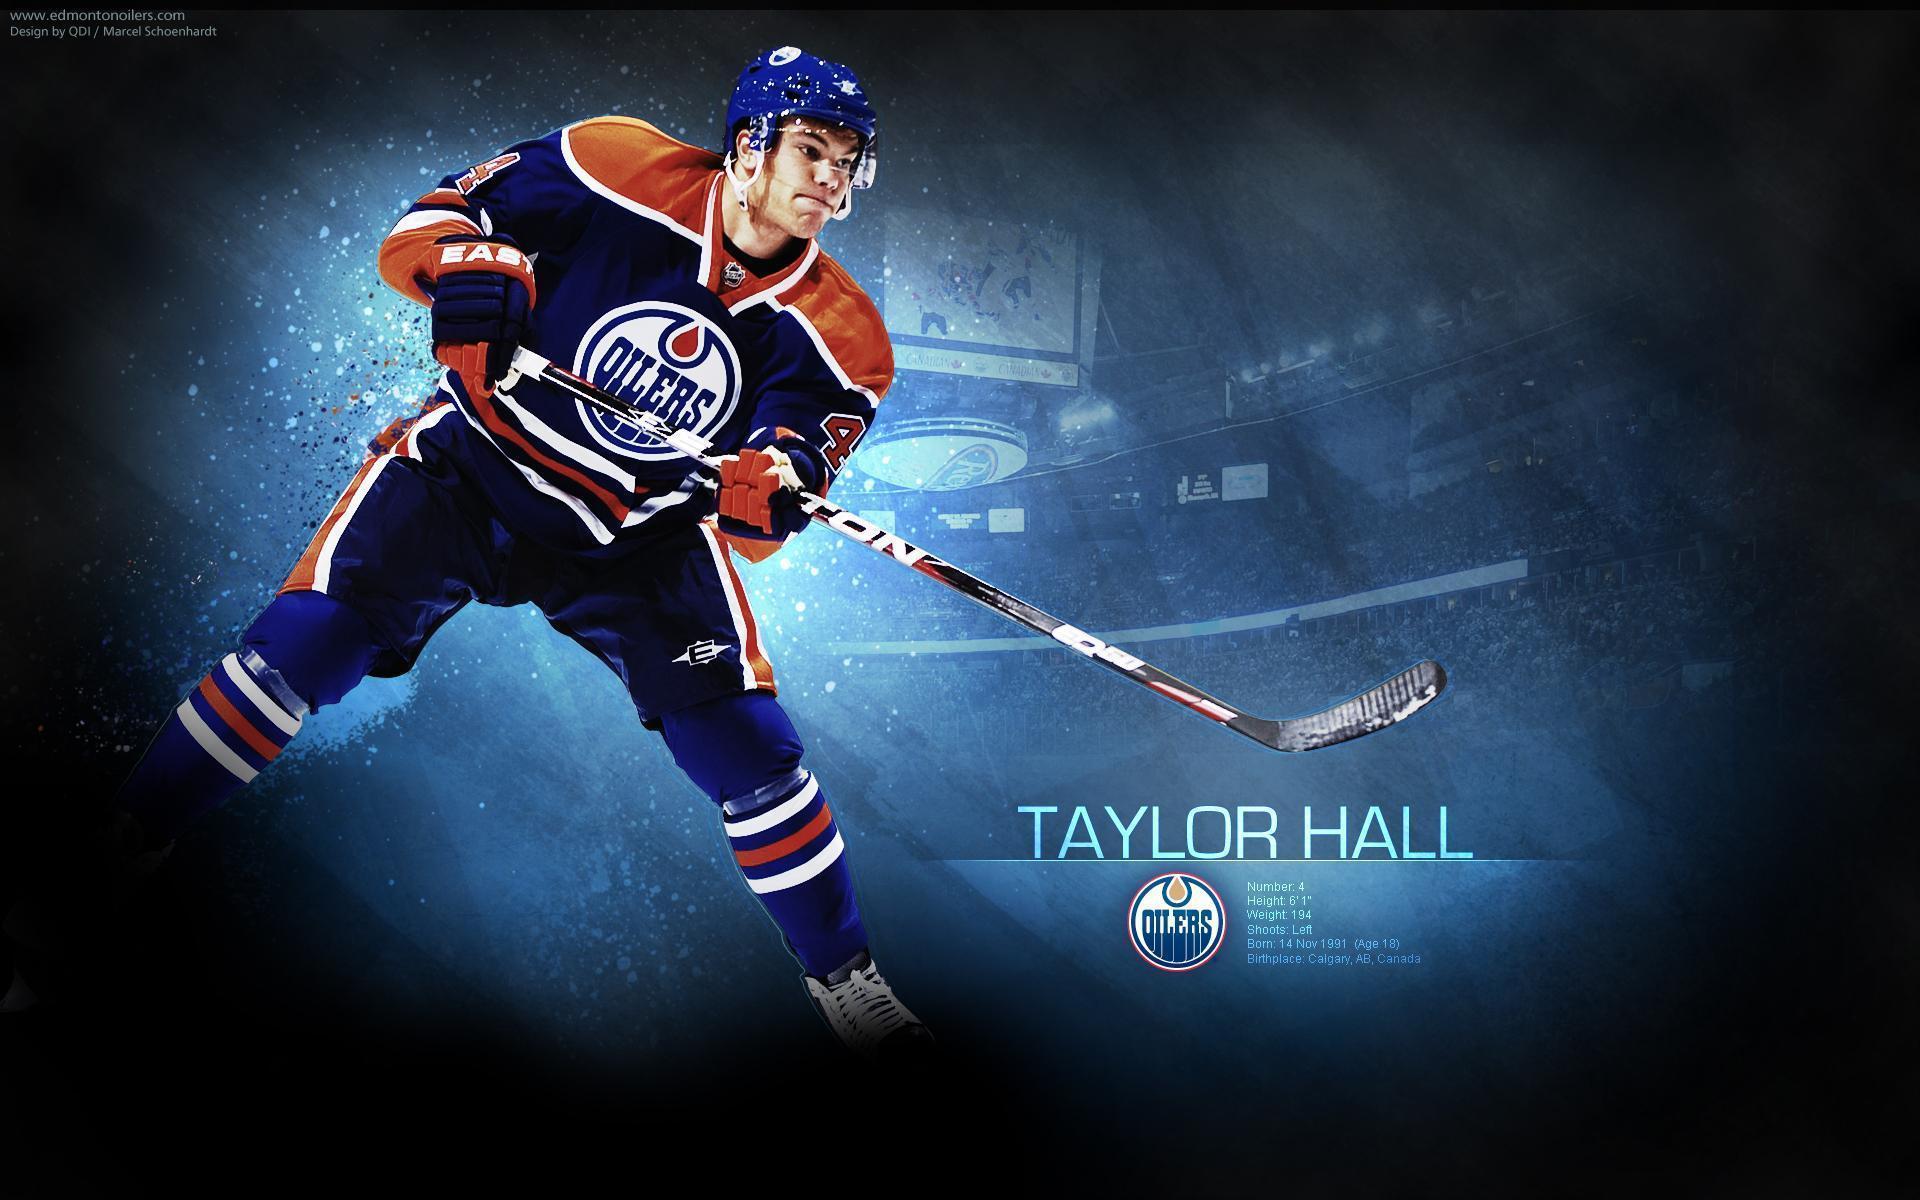 Taylor Hall Edmonton Oilers - Image And Wallpaper free